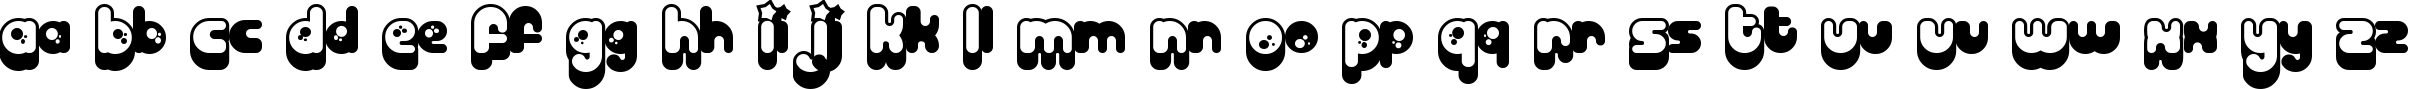 Пример написания английского алфавита шрифтом Billo